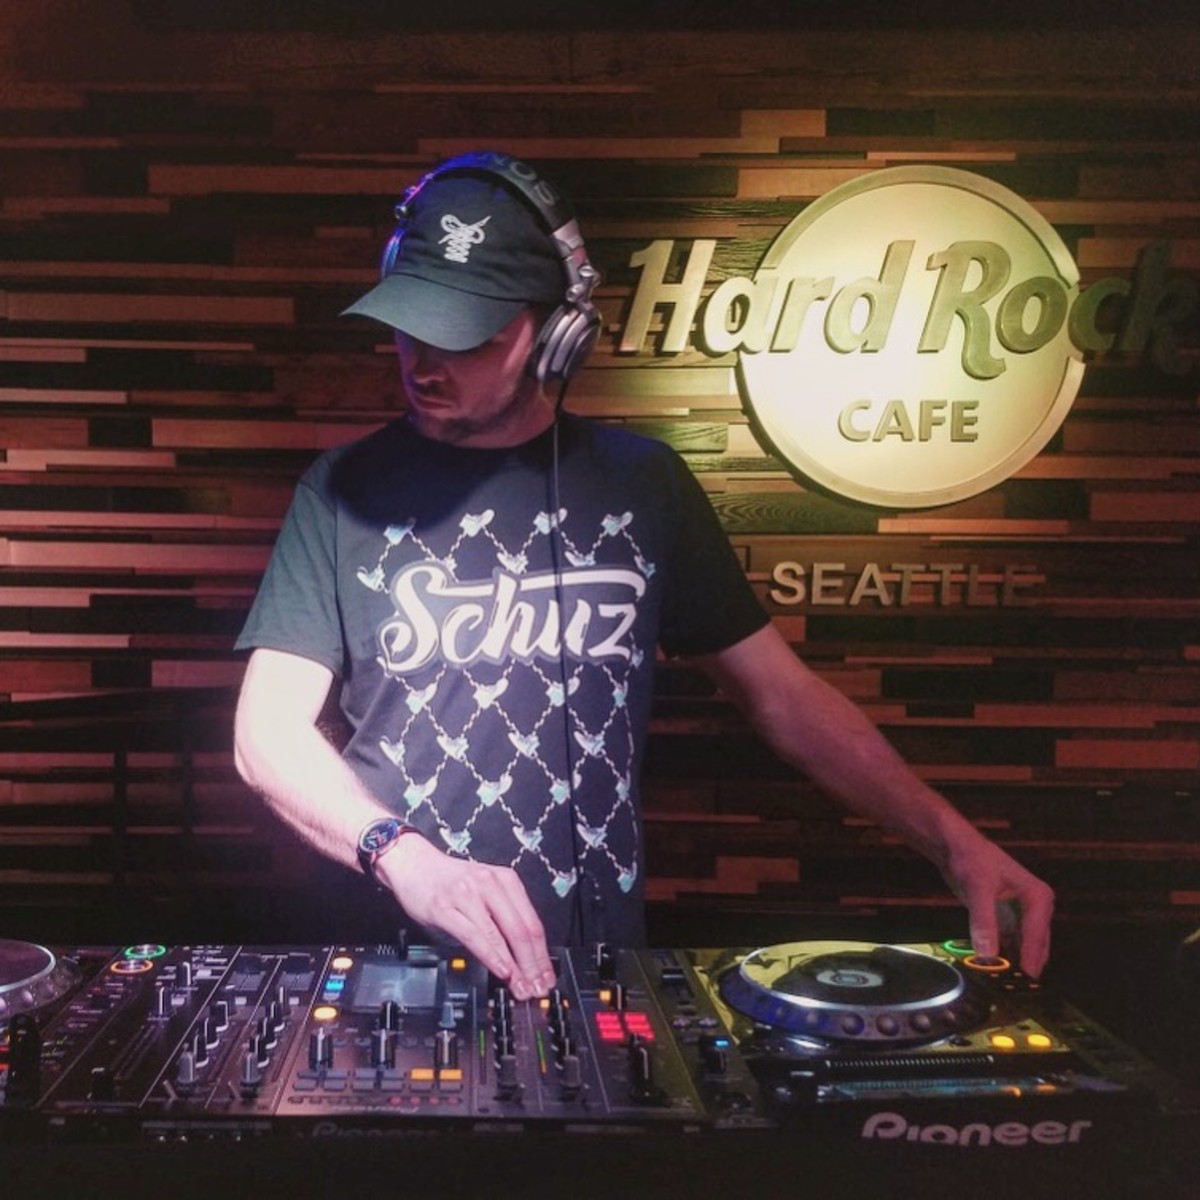 Schuz at the Hard Rock Cafe in Seattle, Washington